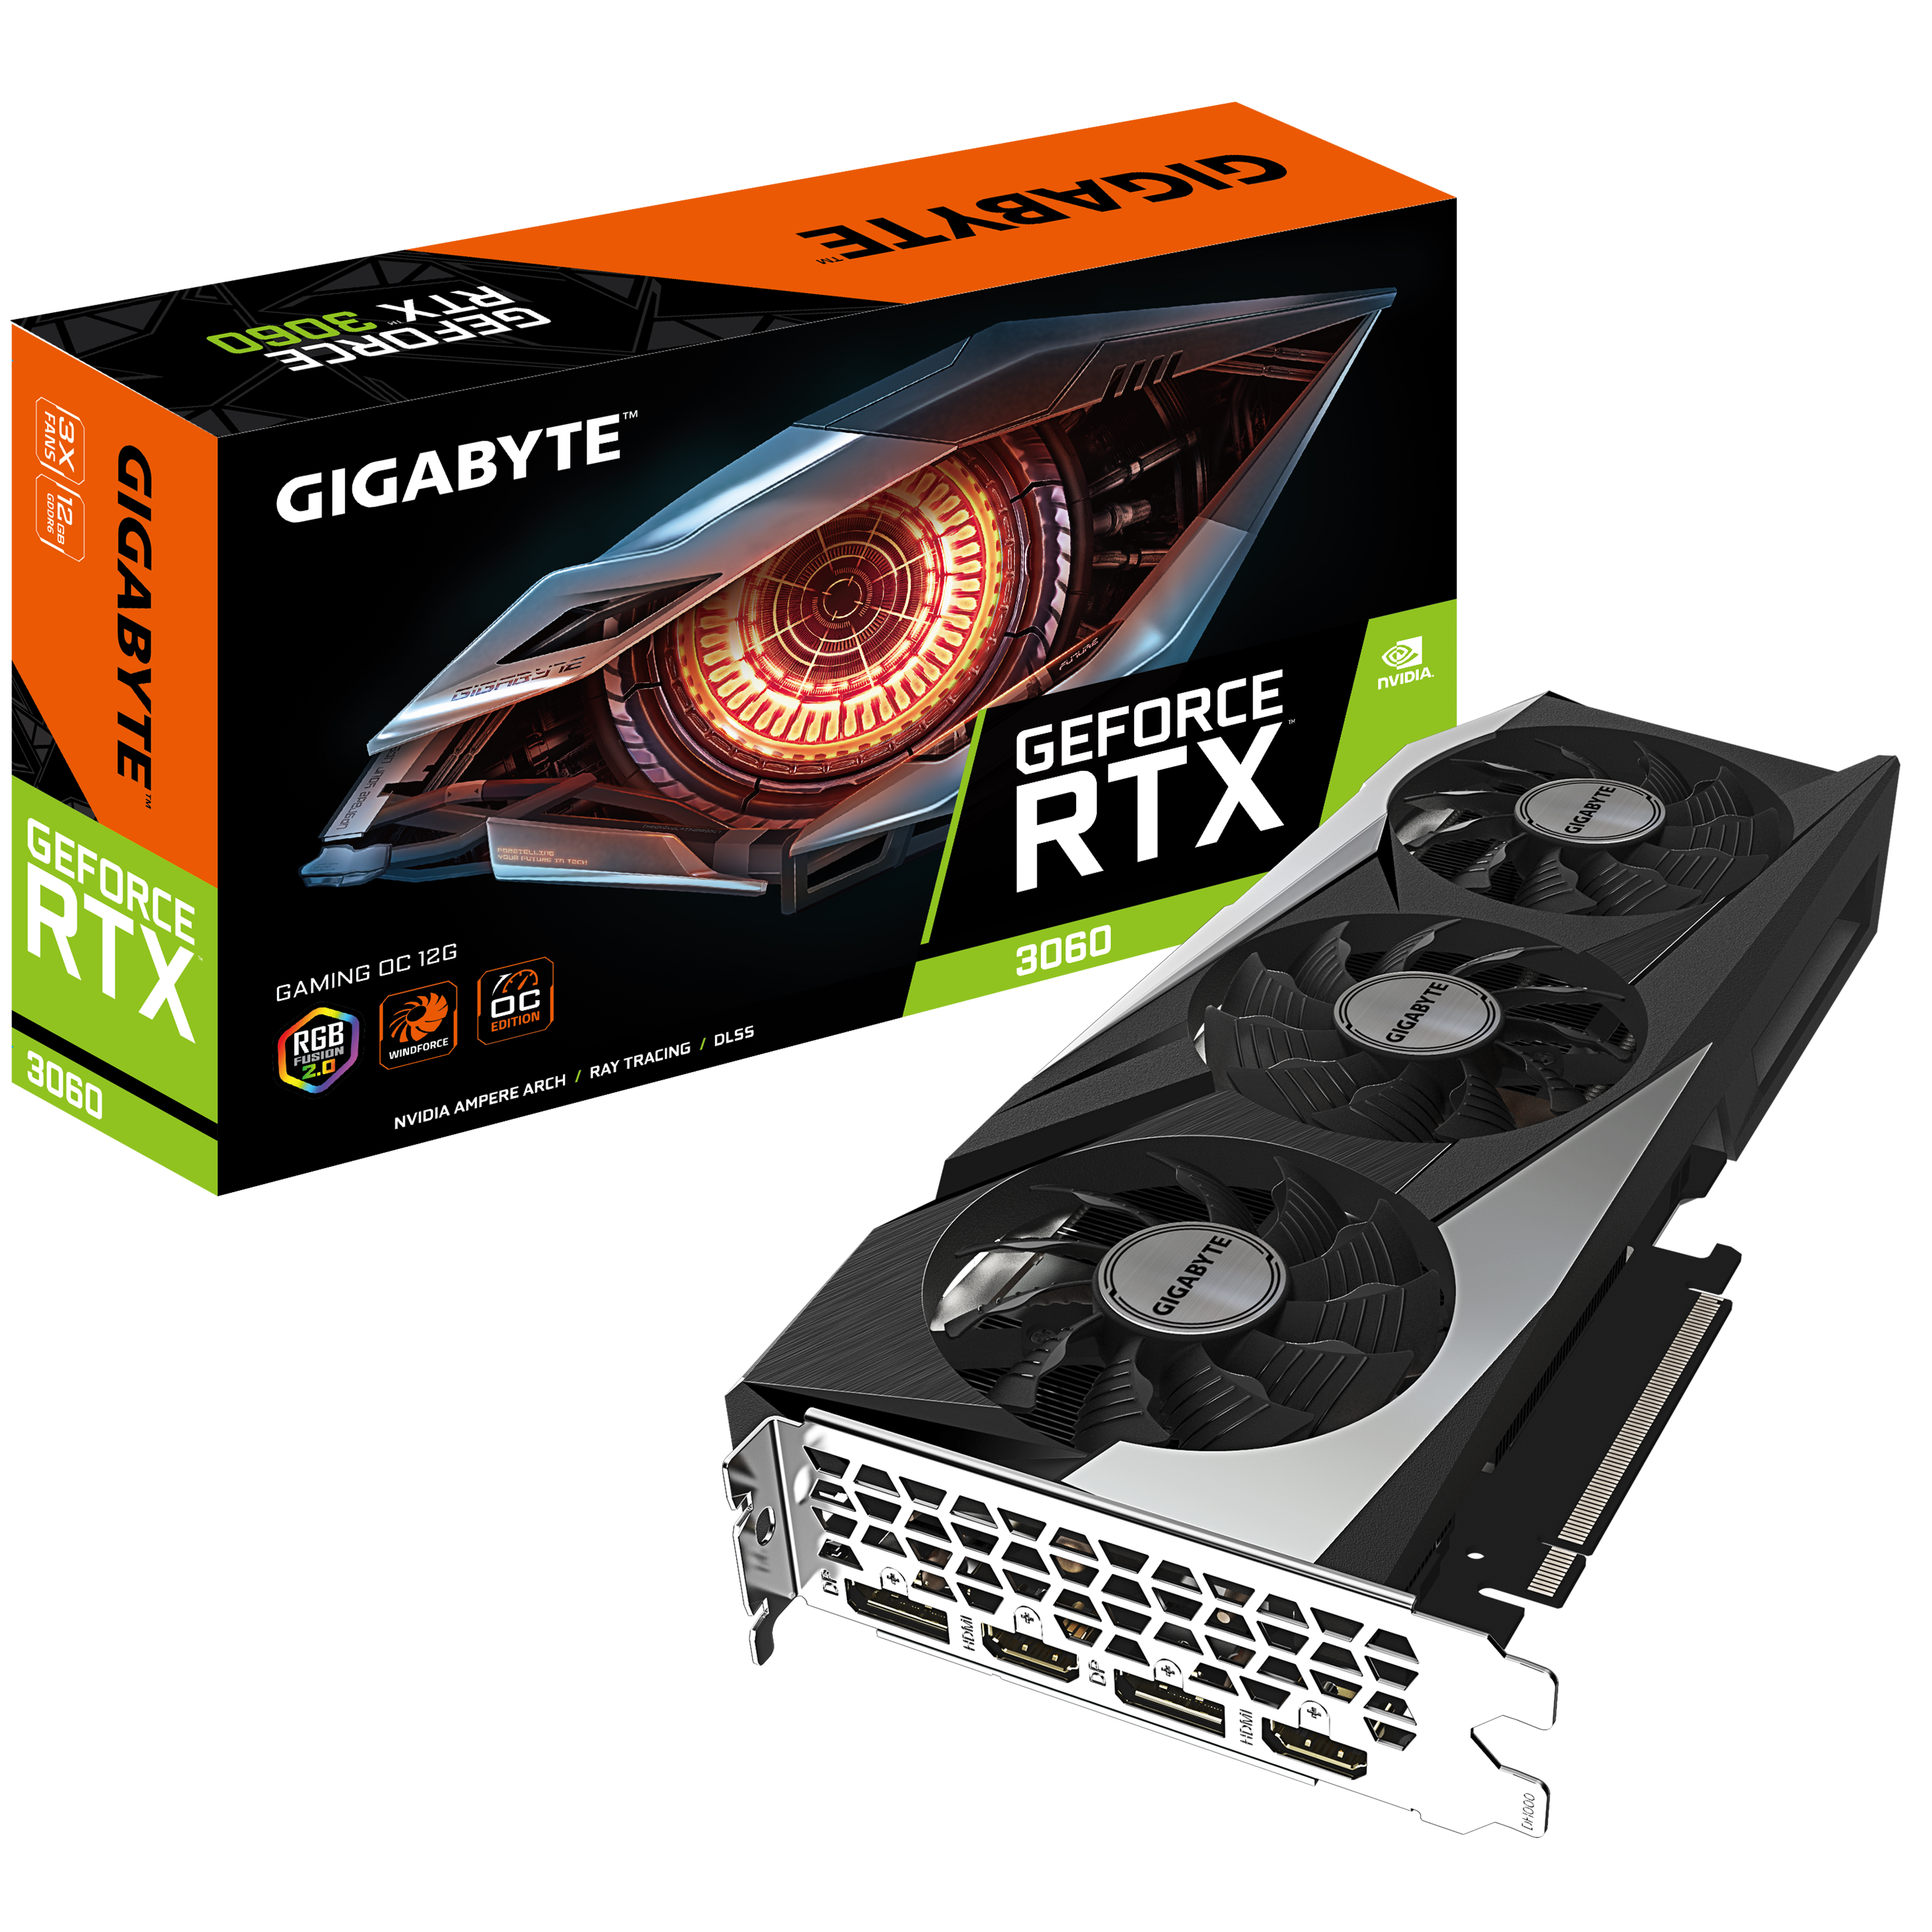 Gigabyte nVidia GeForce RTX 3060 Gaming OC 12GB DDR6, 2xHDMI / 2xDP, PCIe 4.0